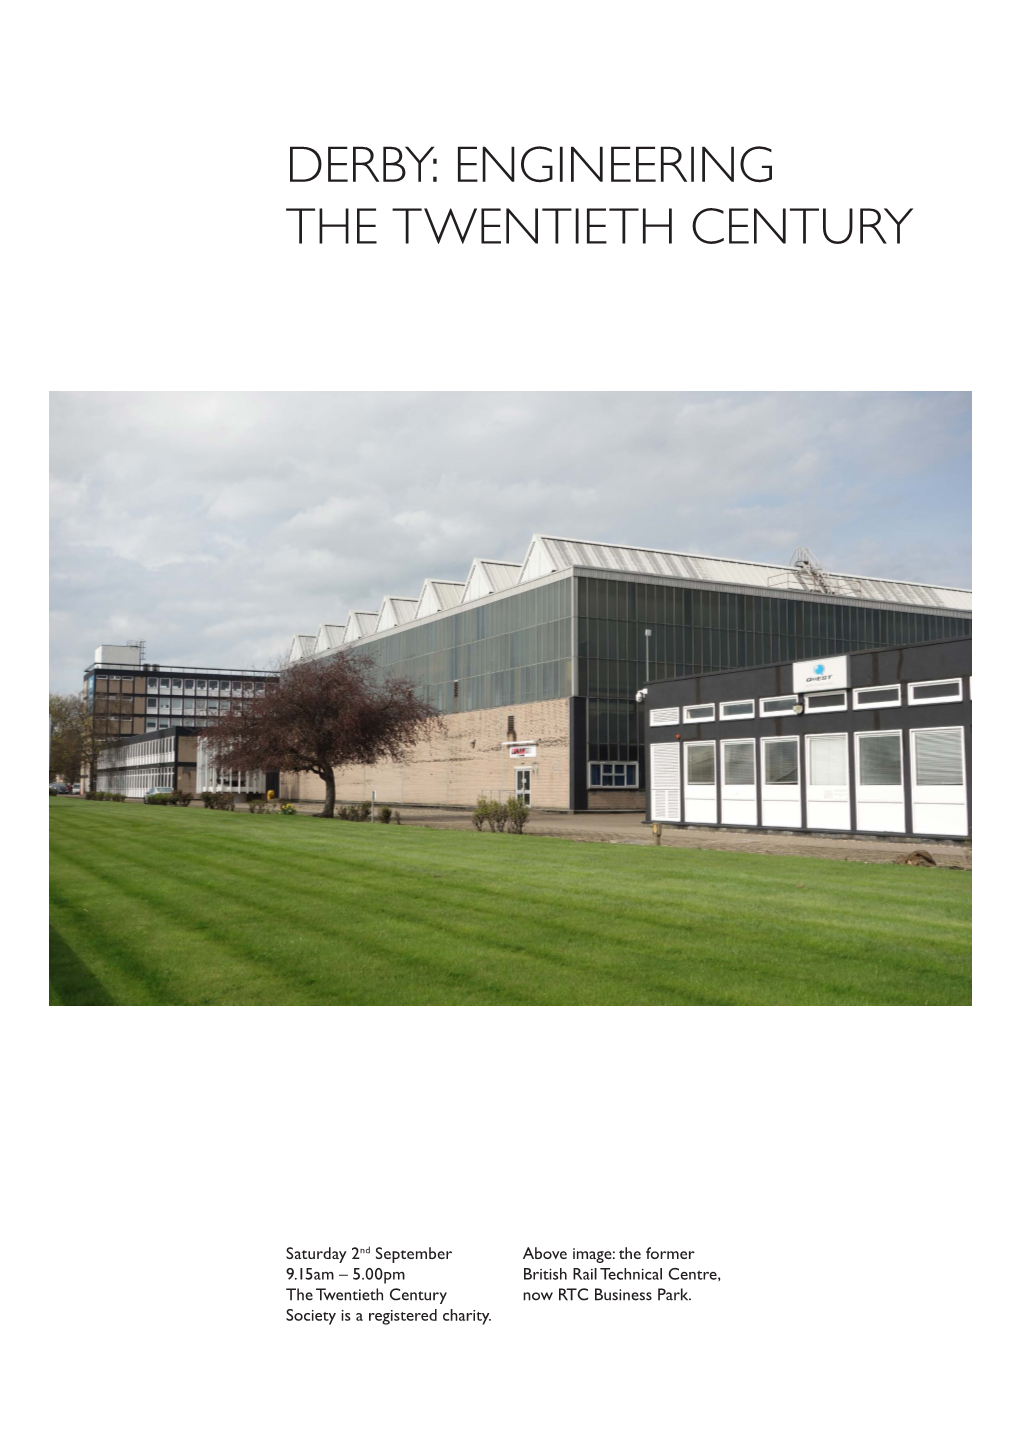 Derby: Engineering the Twentieth Century